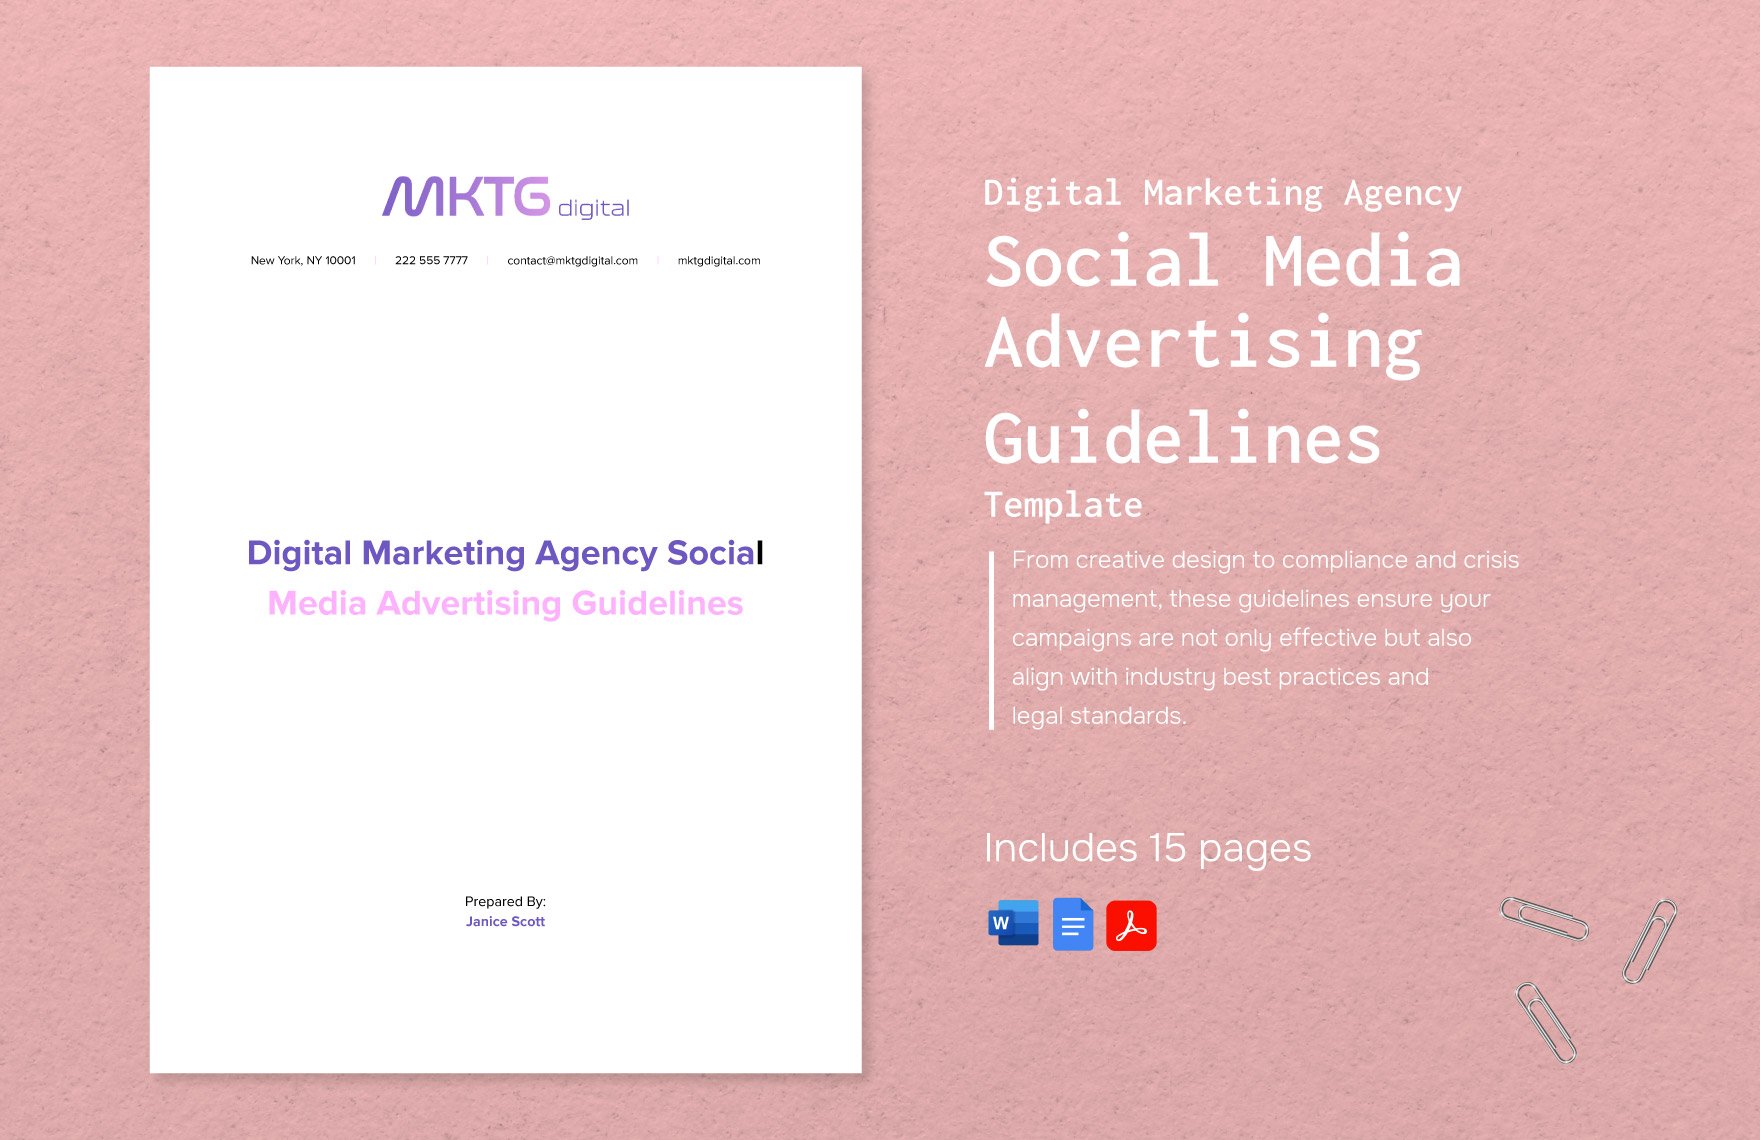 Digital Marketing Agency Social Media Advertising Guidelines Template